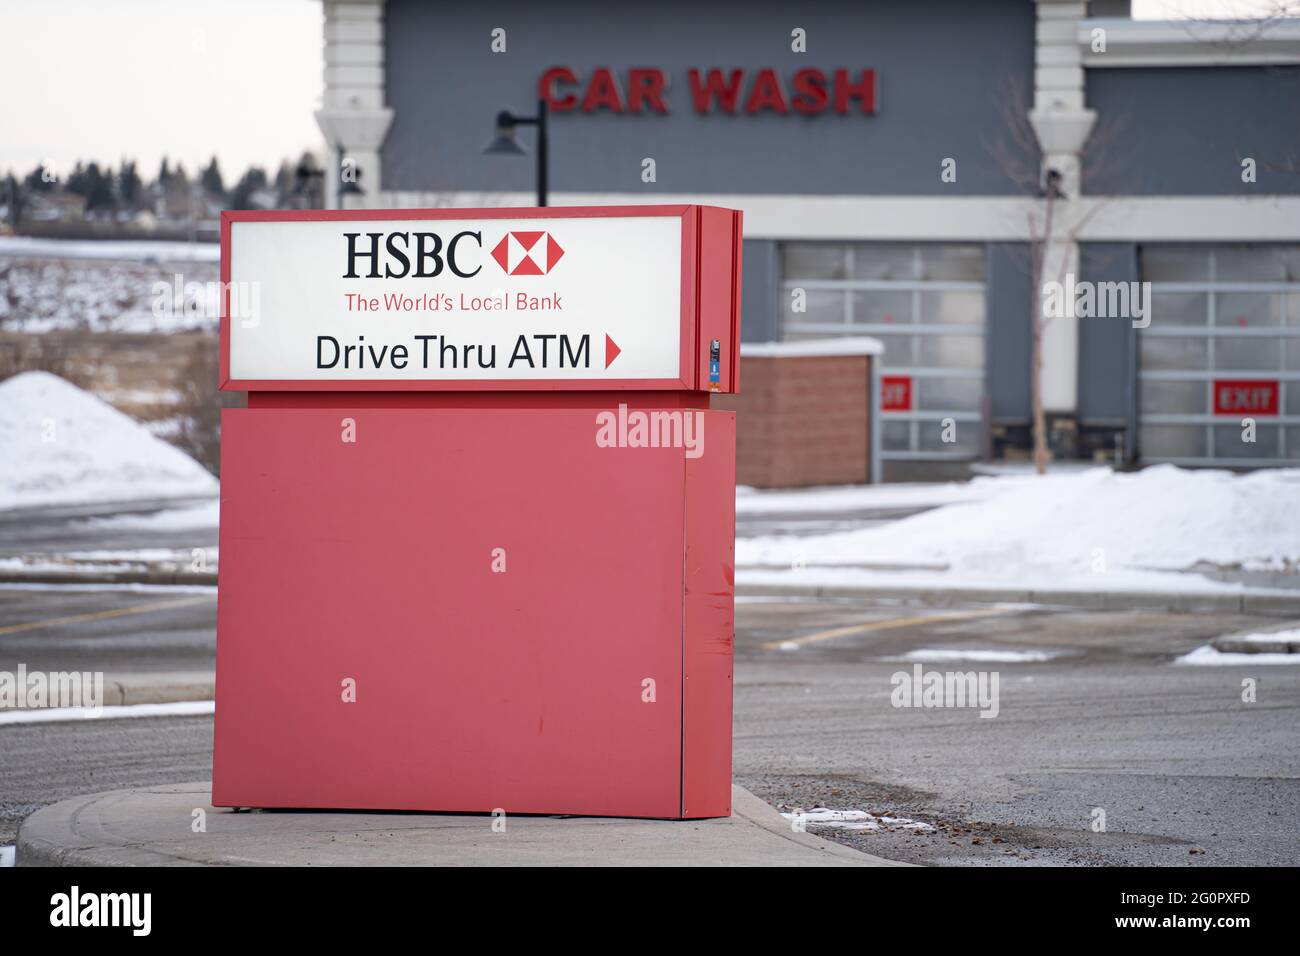 January 31 2021 - Calgary Alberta Canada - HSBC Drive thru ATM Stock Photo